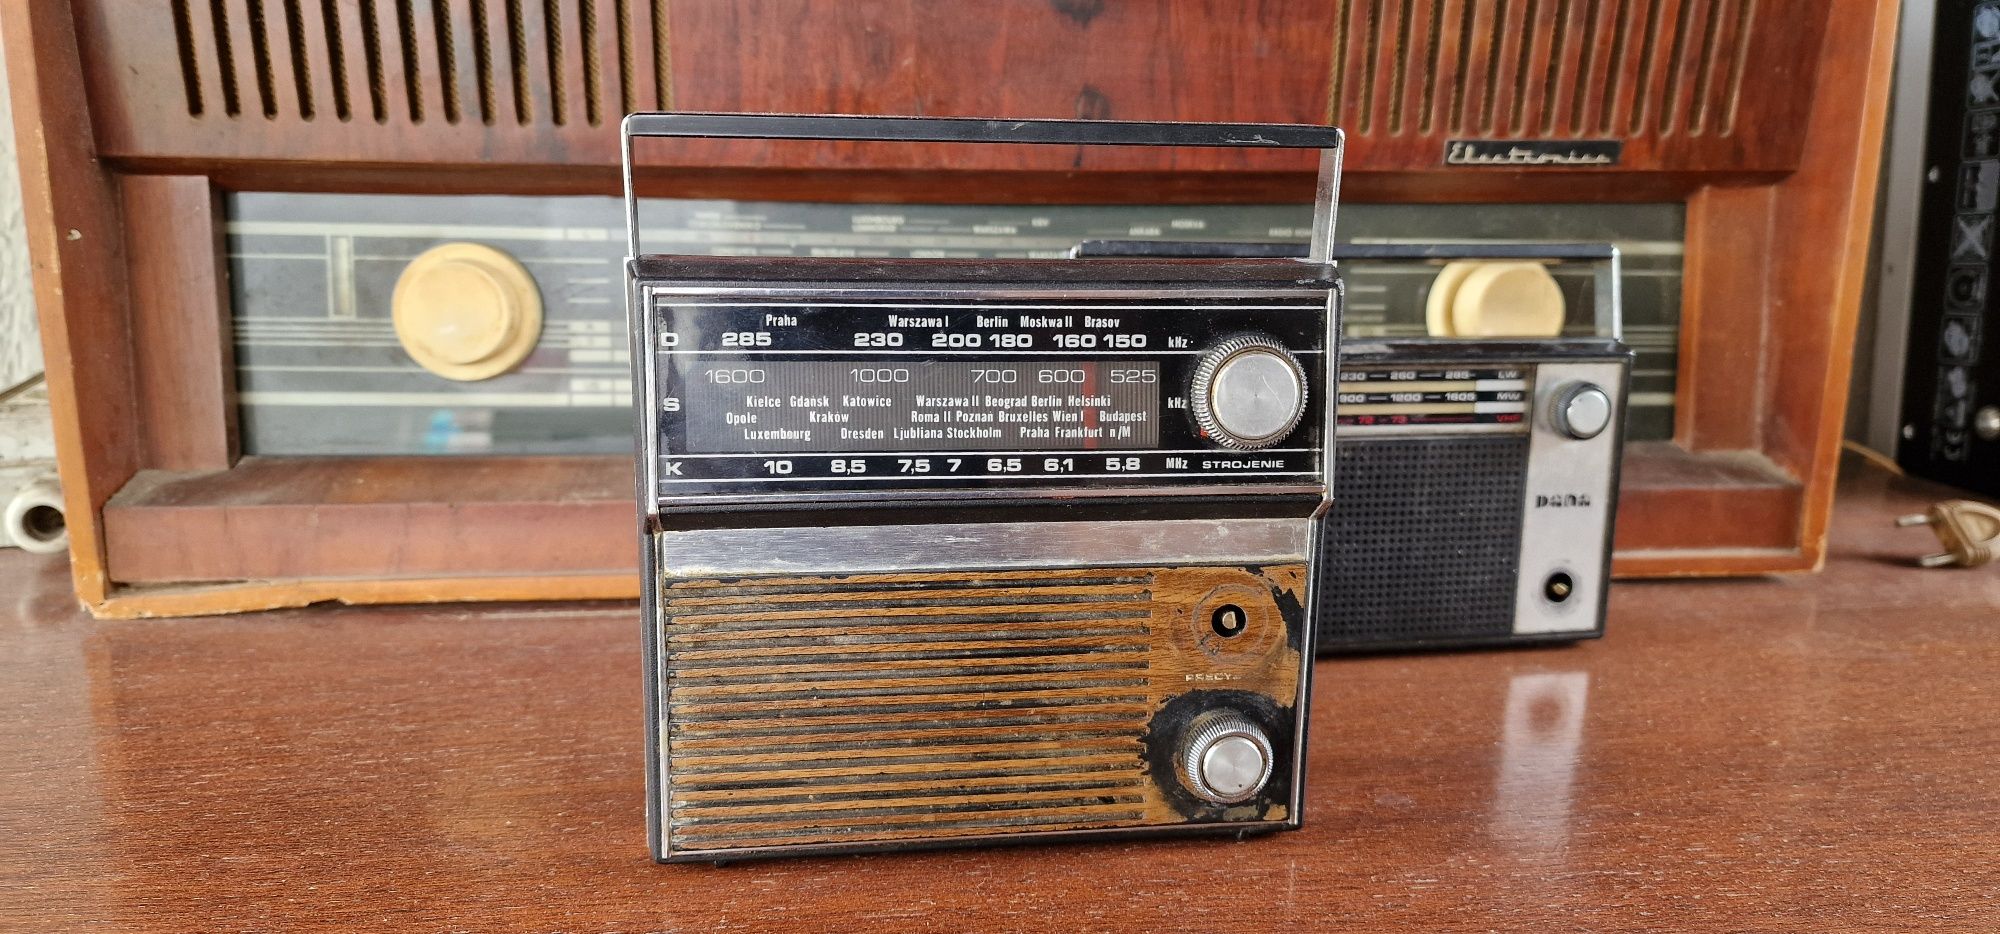 Radio vintage Monika Unitra functional retro